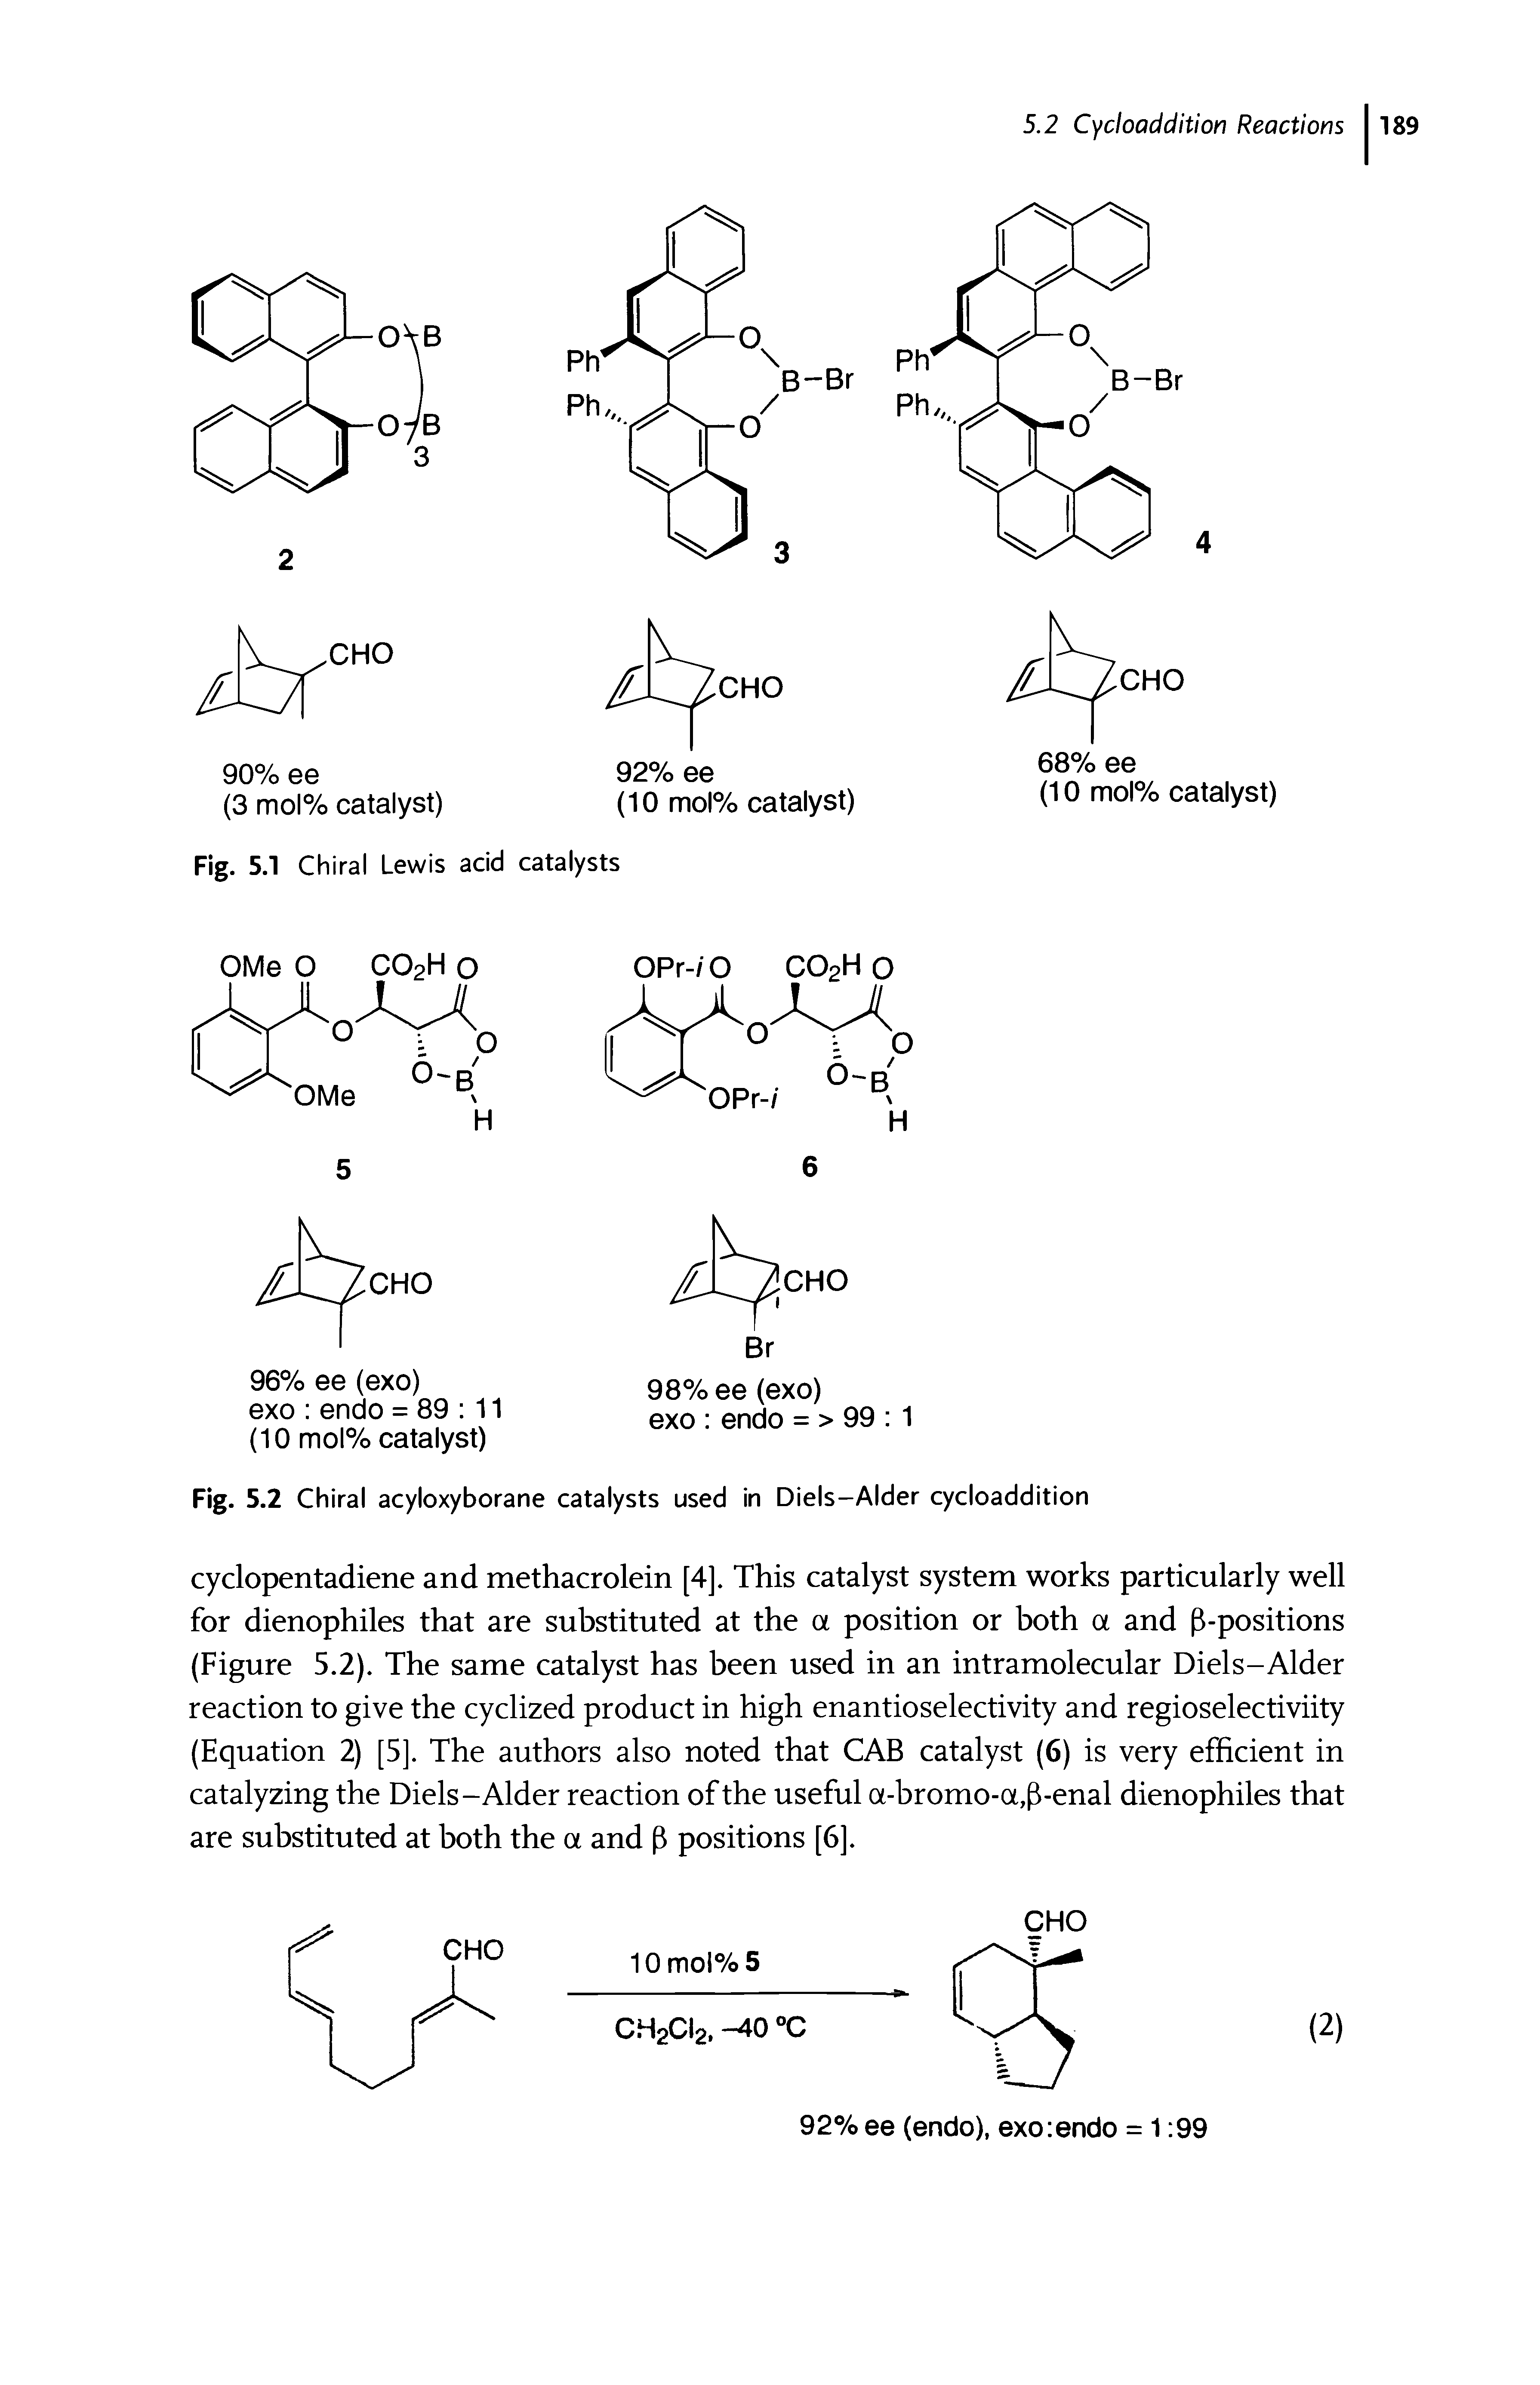 Fig. 5.2 Chiral acyloxyborane catalysts used in Diels-Alder cycloaddition...